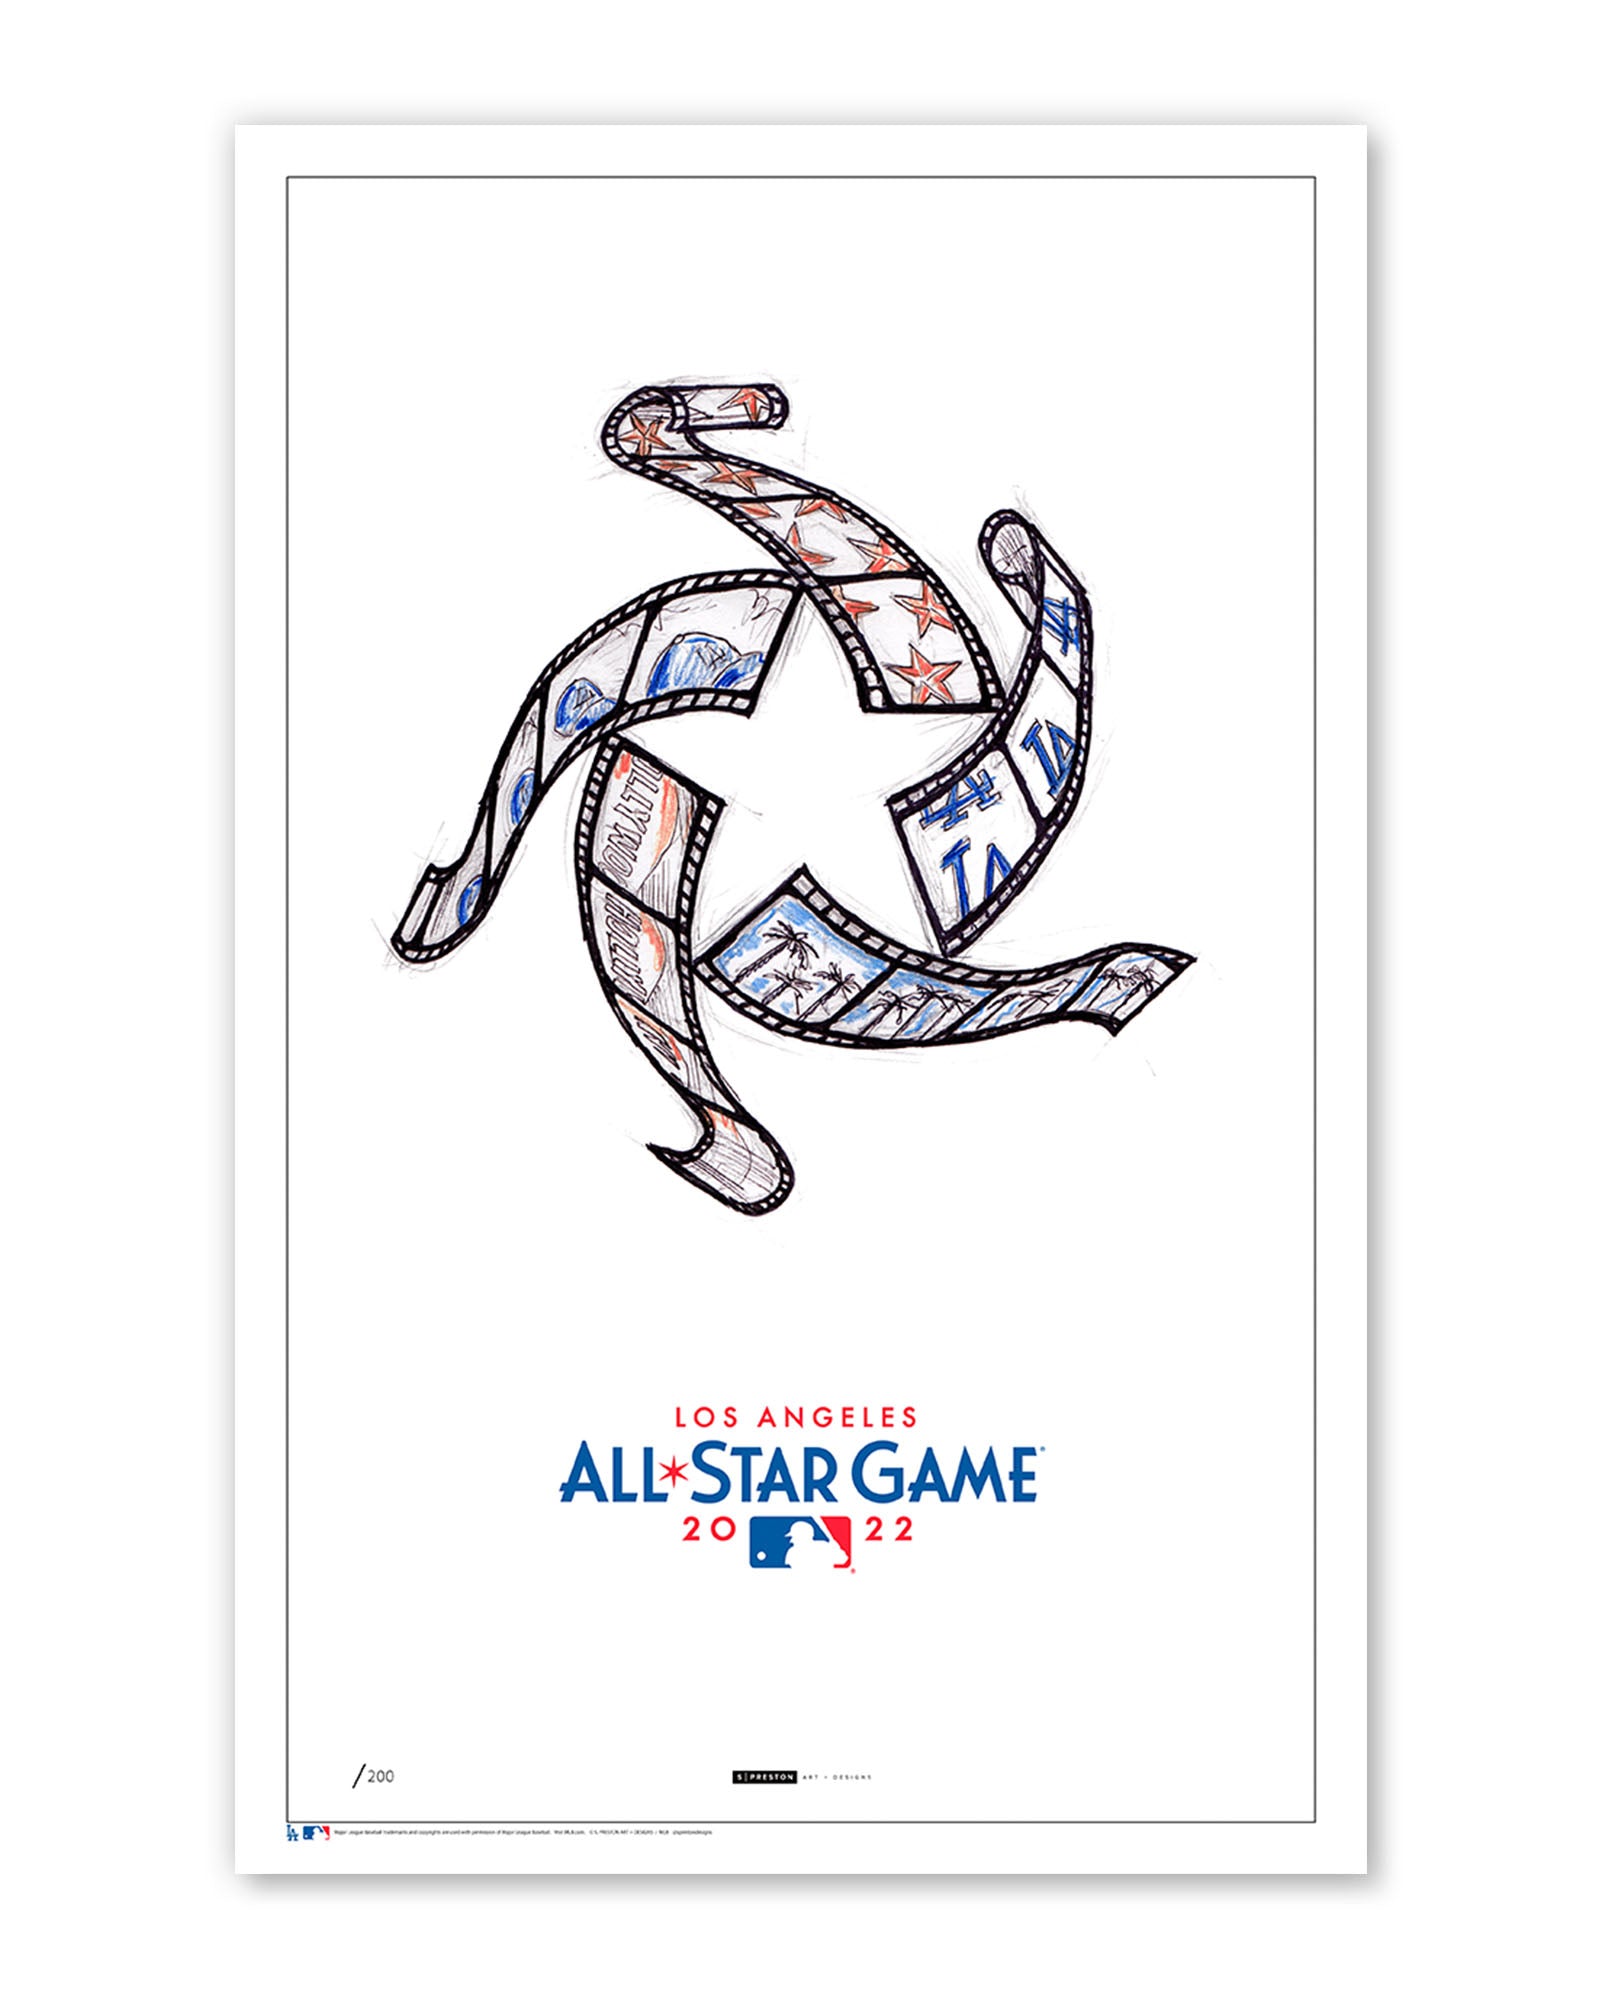 MLB All-Star Game 2022: Los Angeles